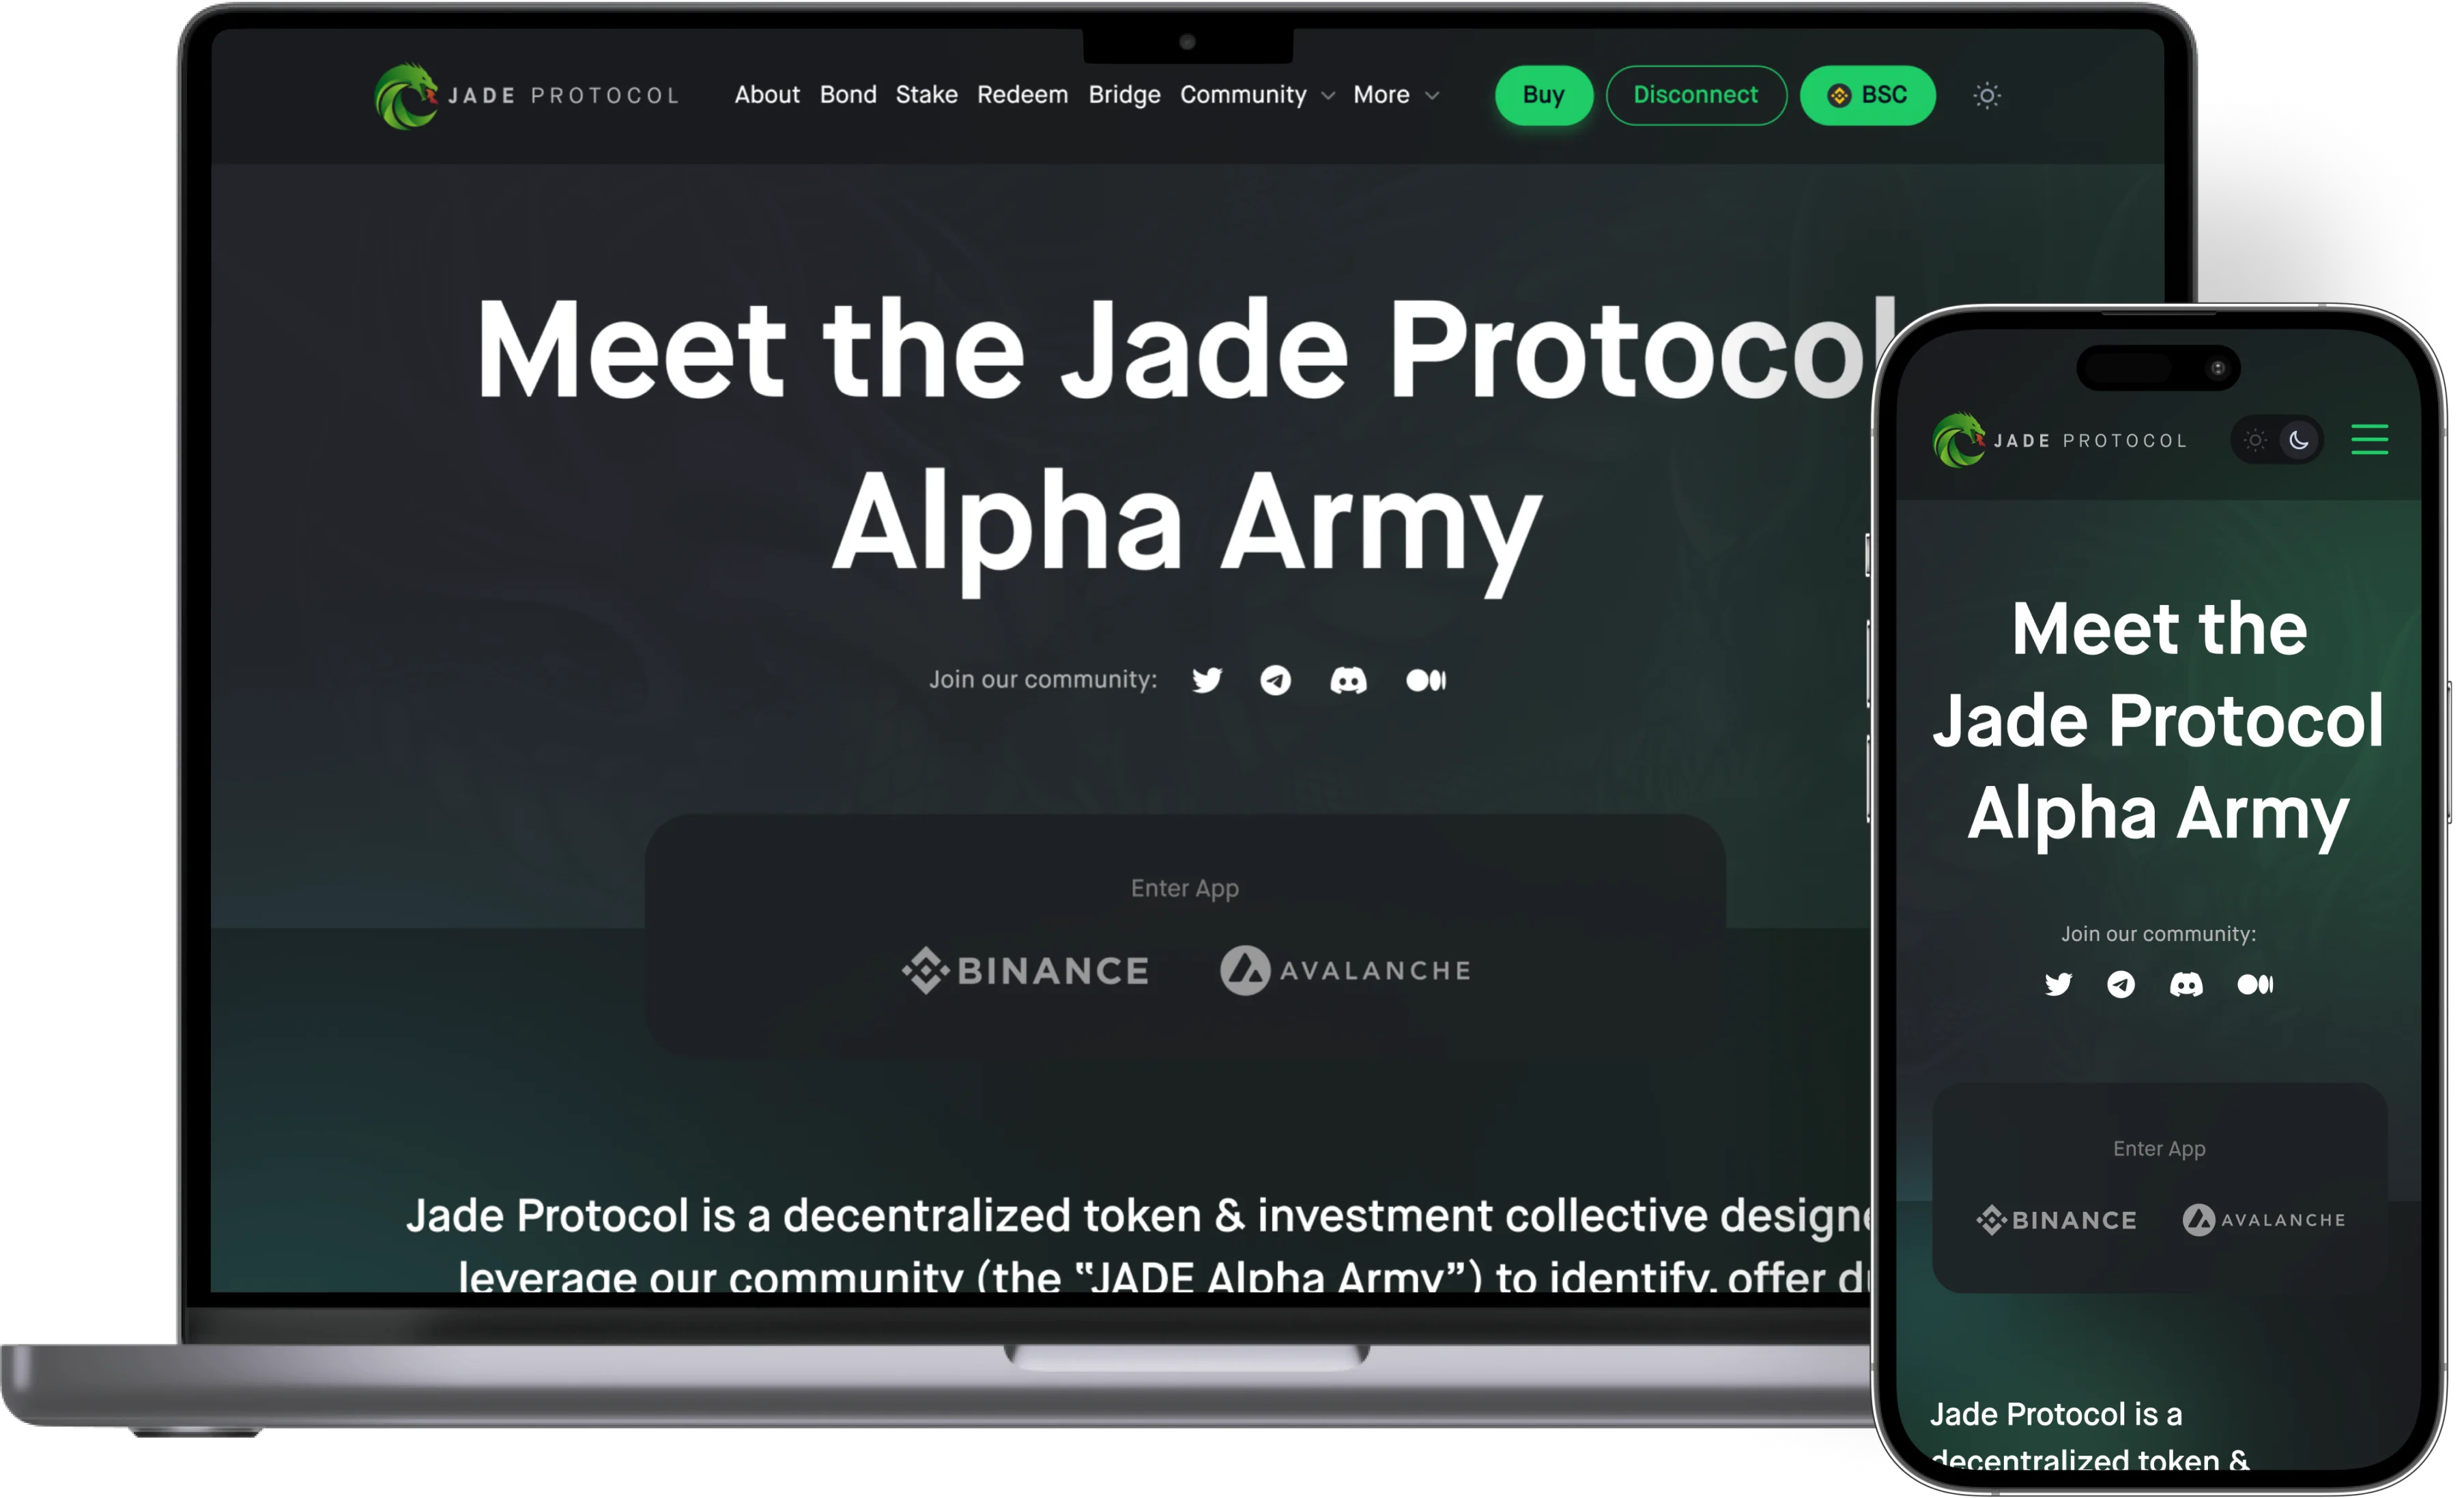 Jade Protocol